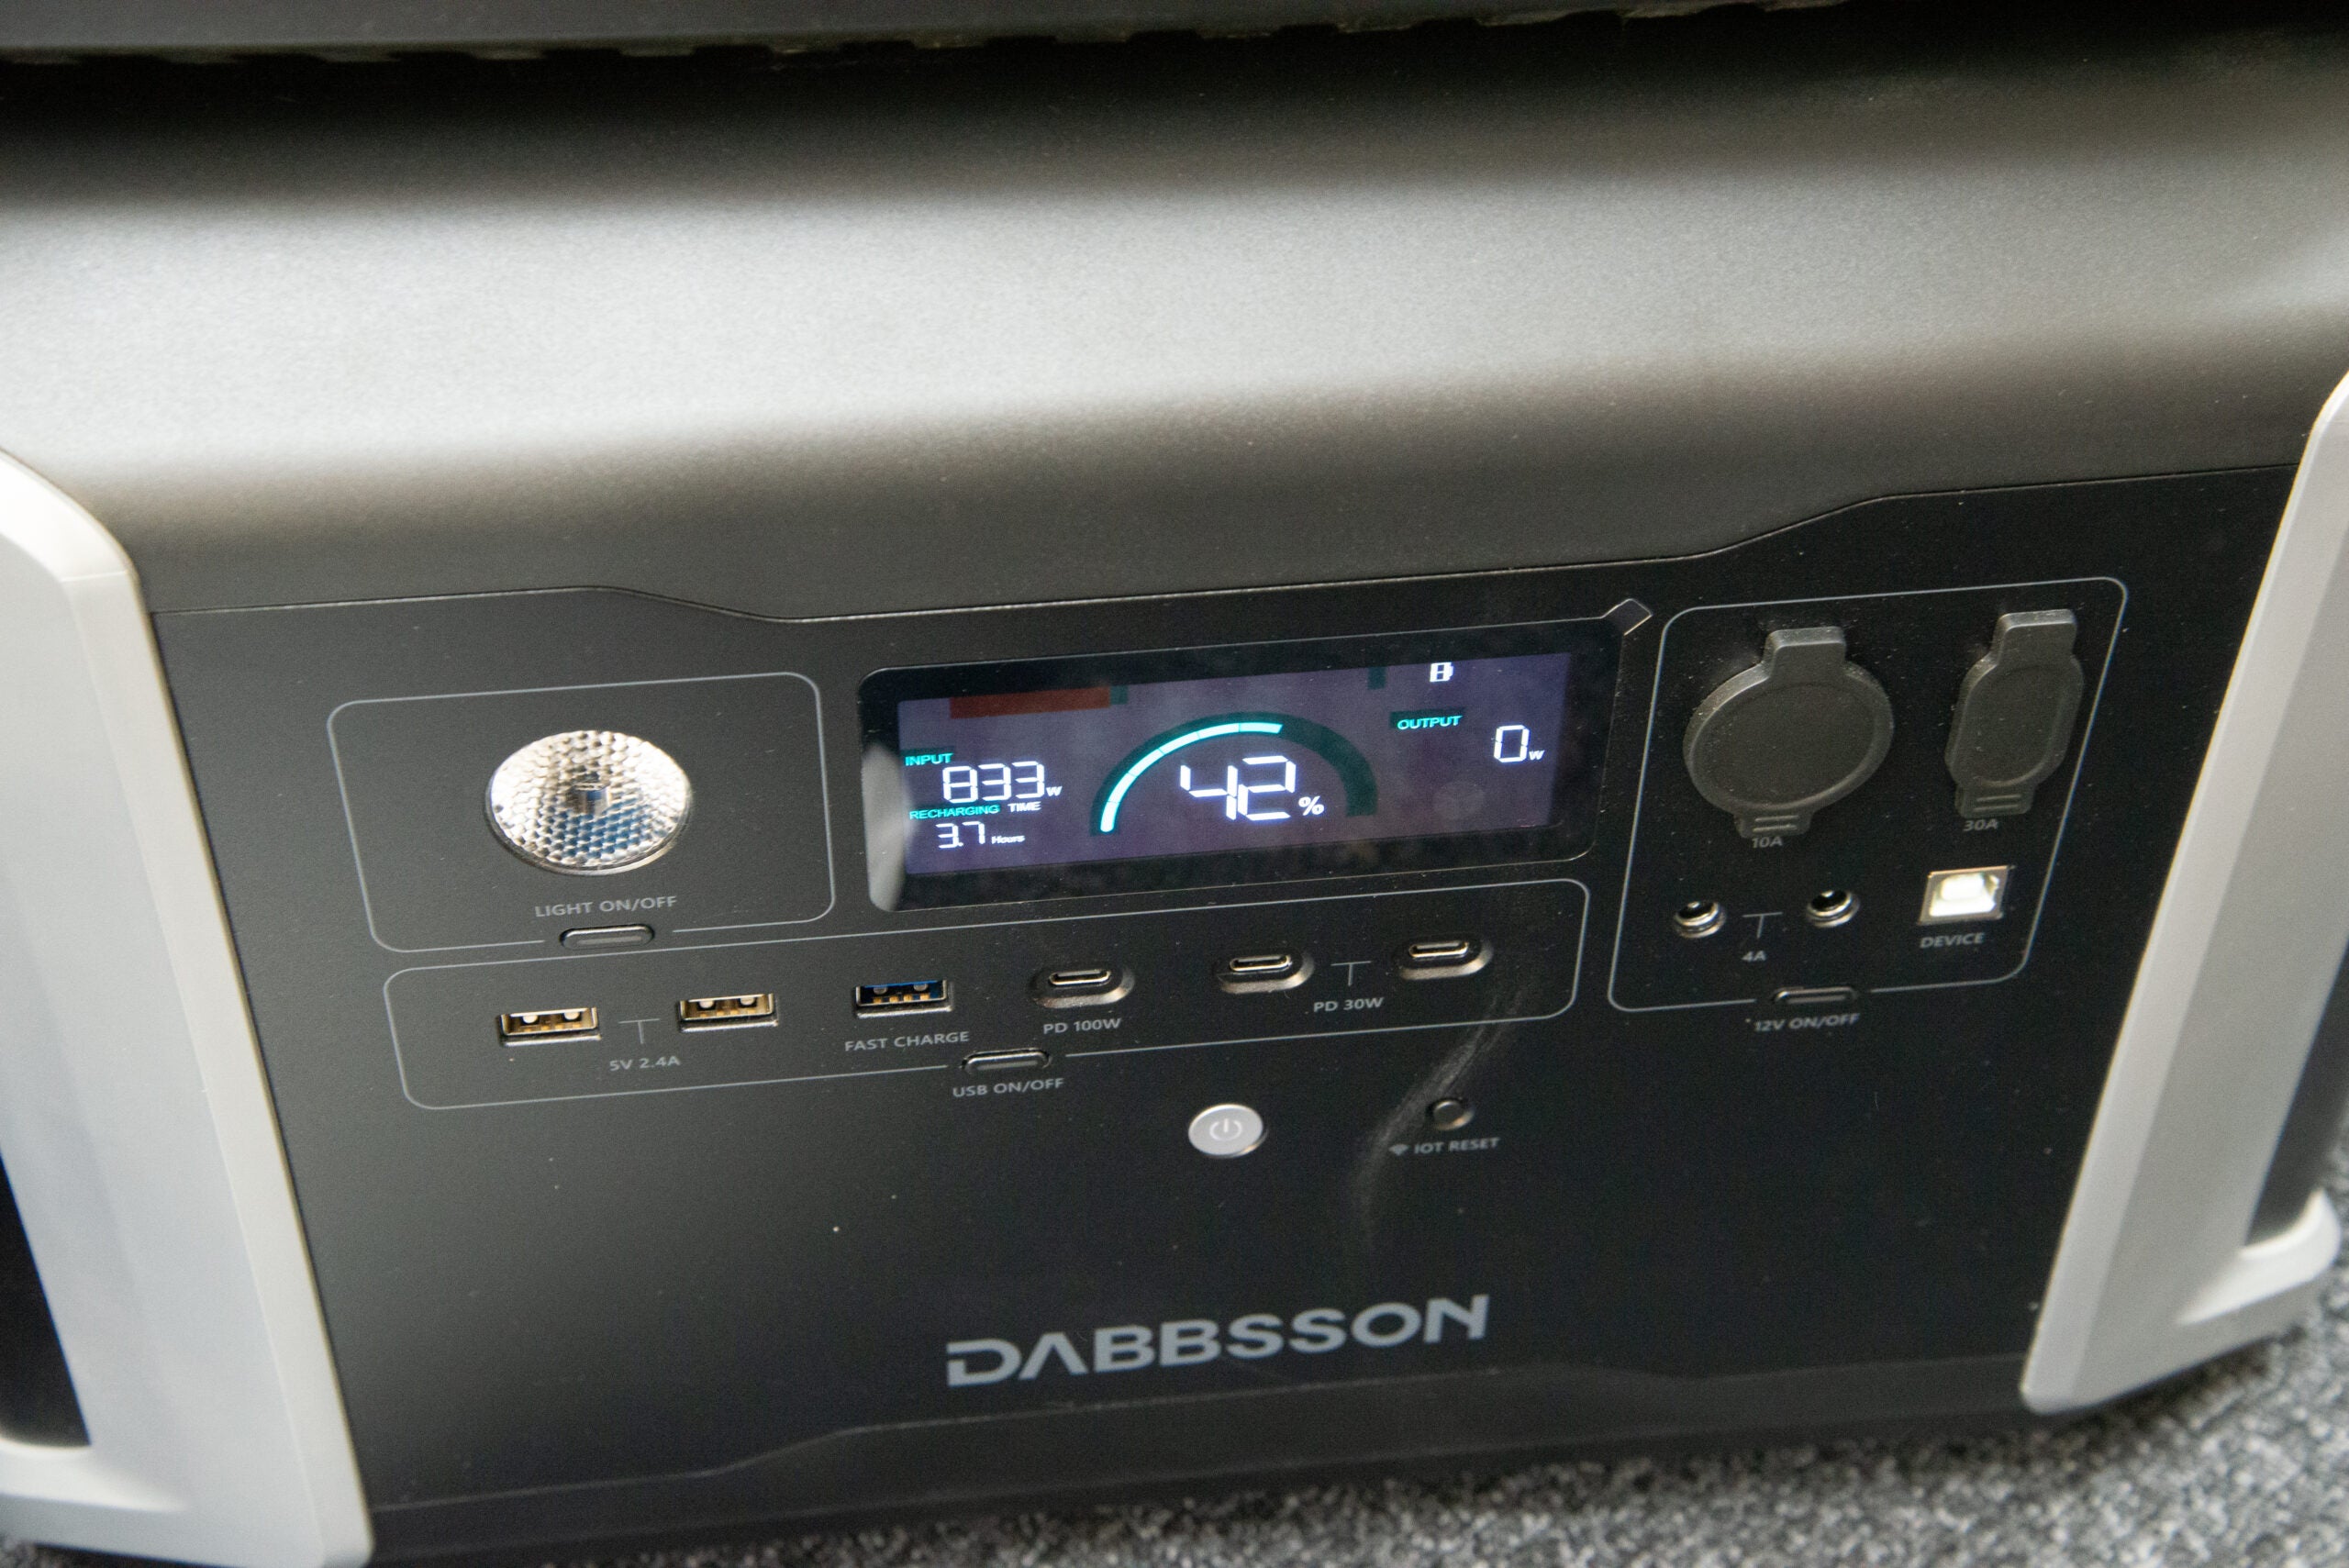 Dabbsson DBS2300 main unit display